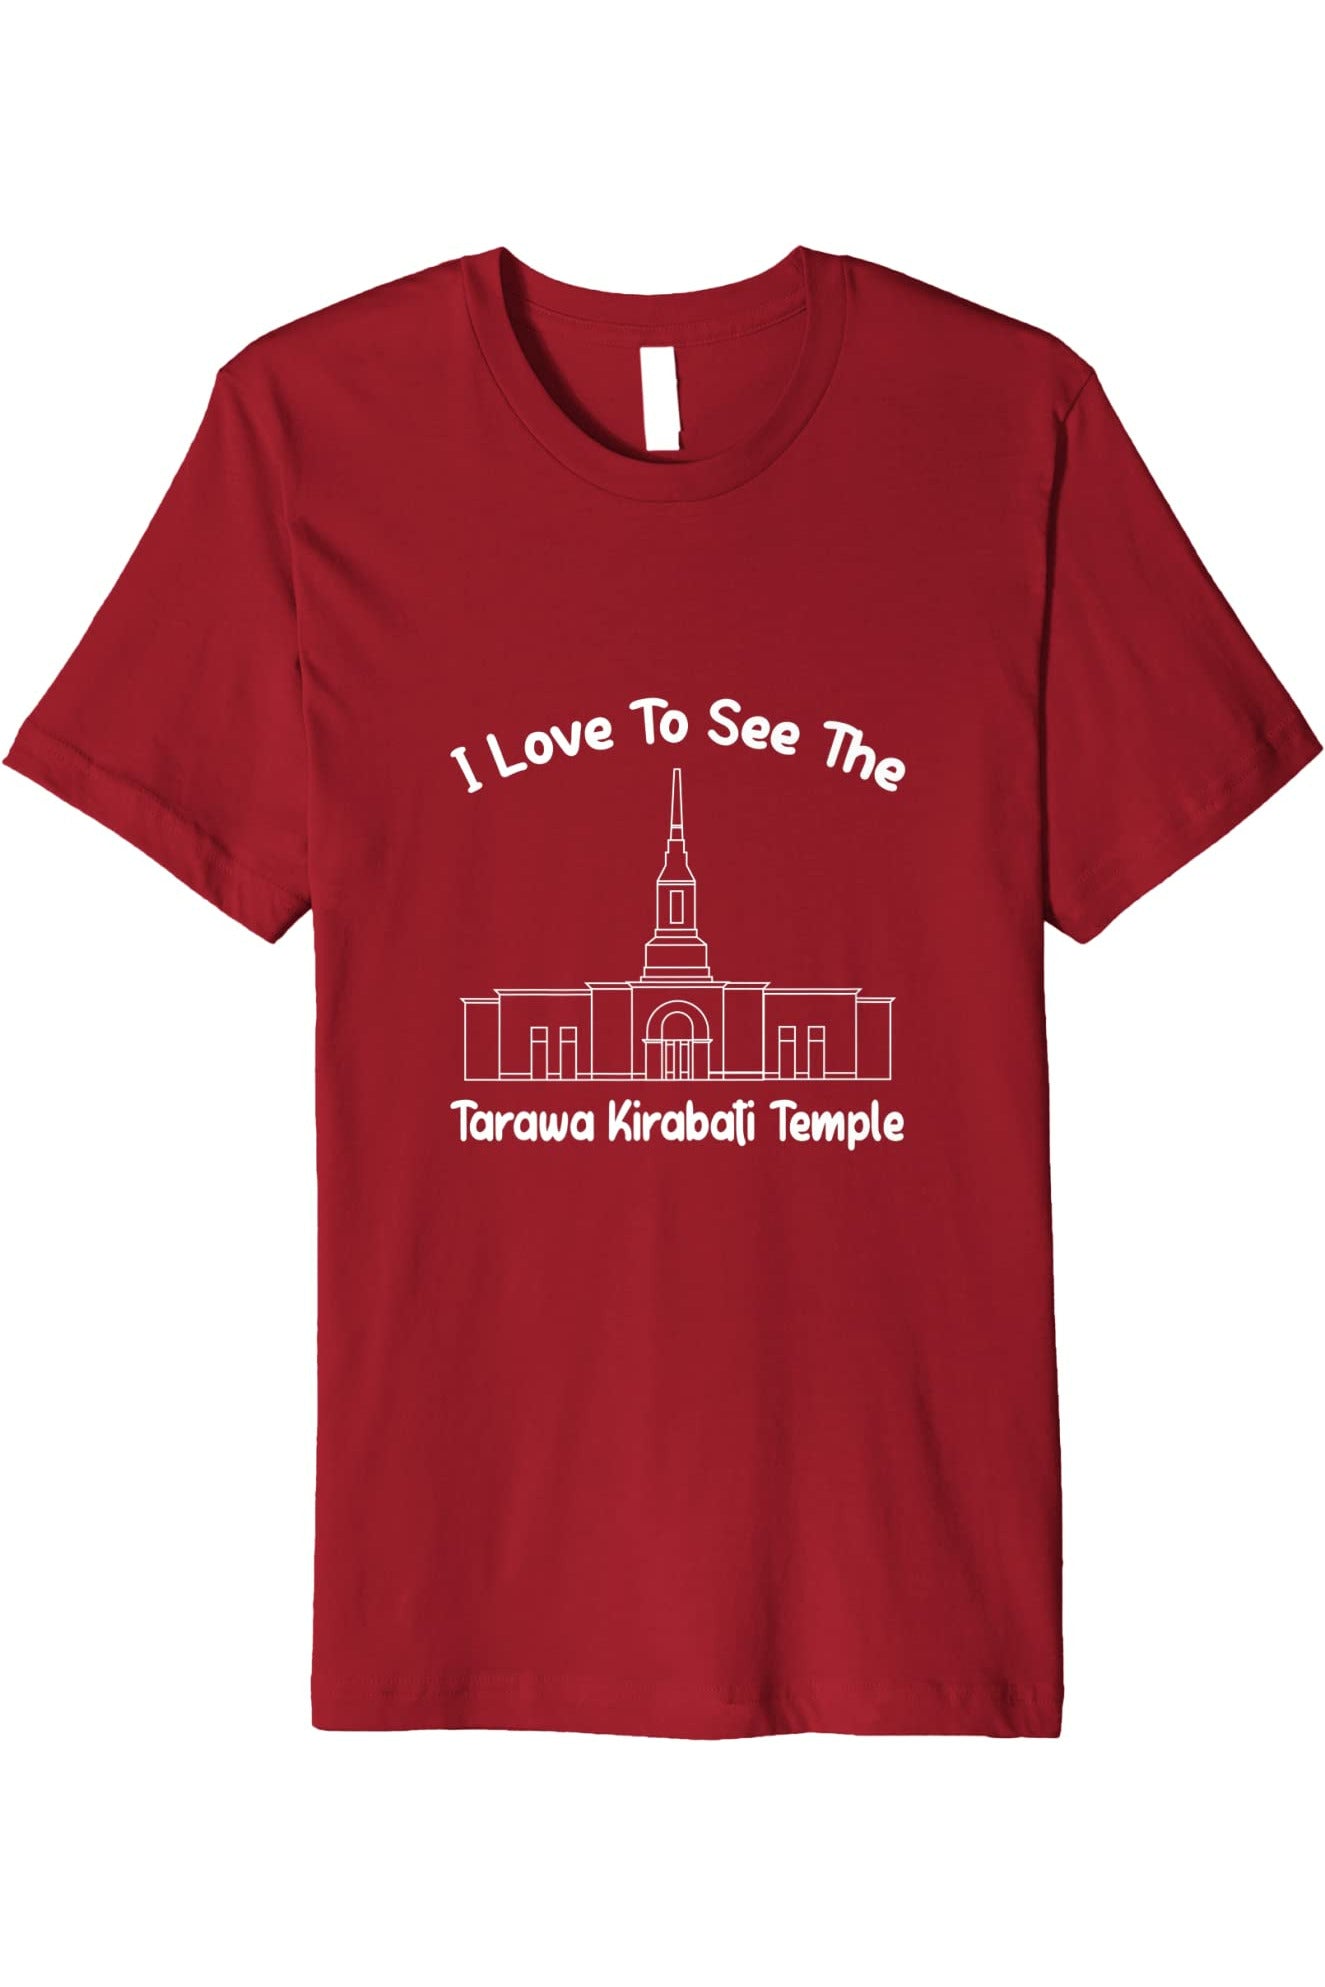 Tarawa Kiribati Temple T-Shirt - Premium - Primary Style (English) US